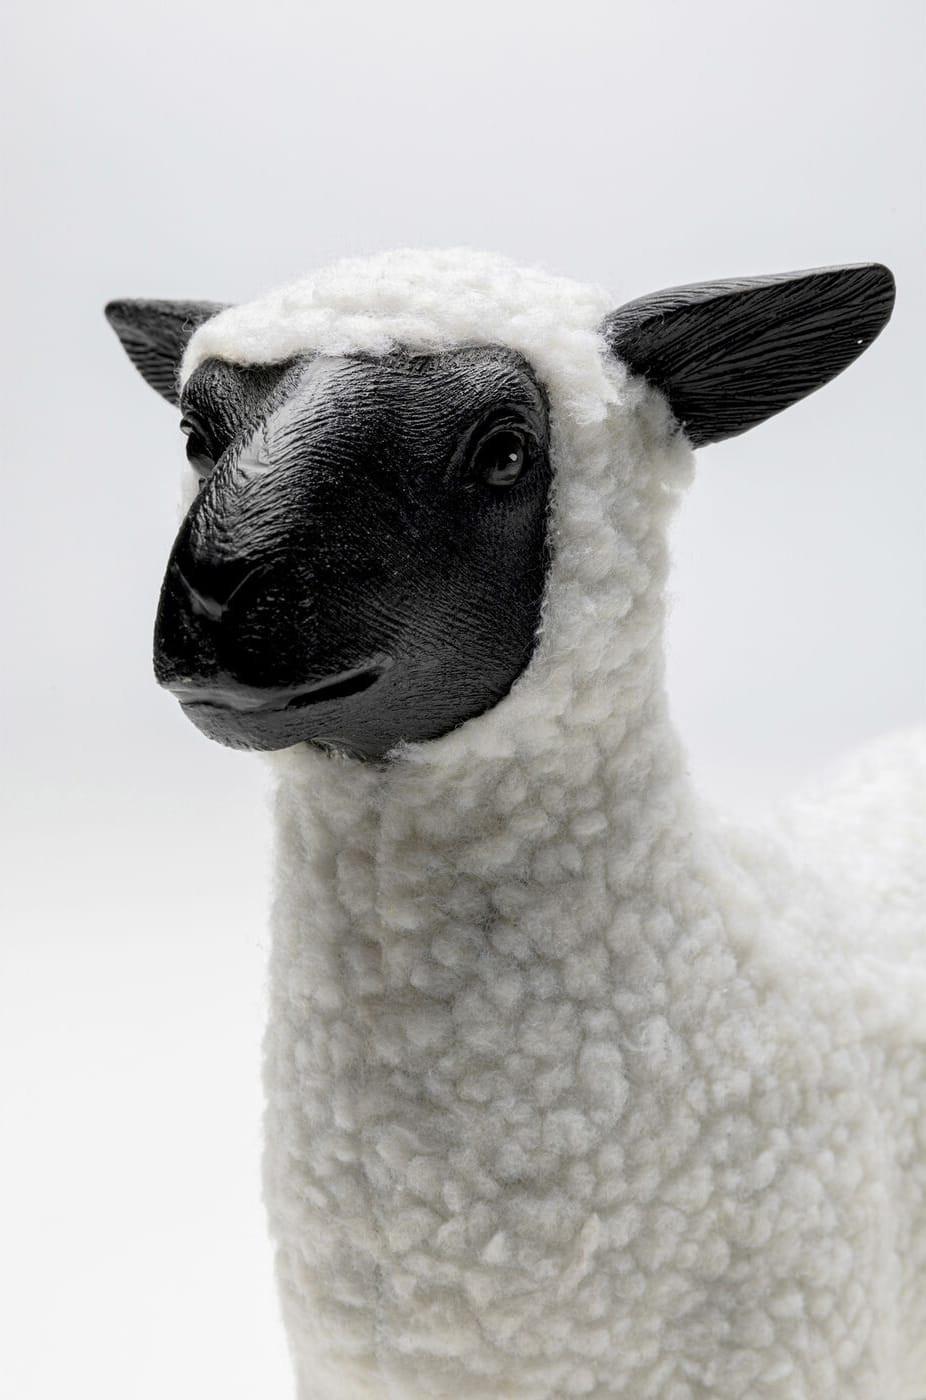 KARE Design Deko Figur Happy Sheep Wool weiss  